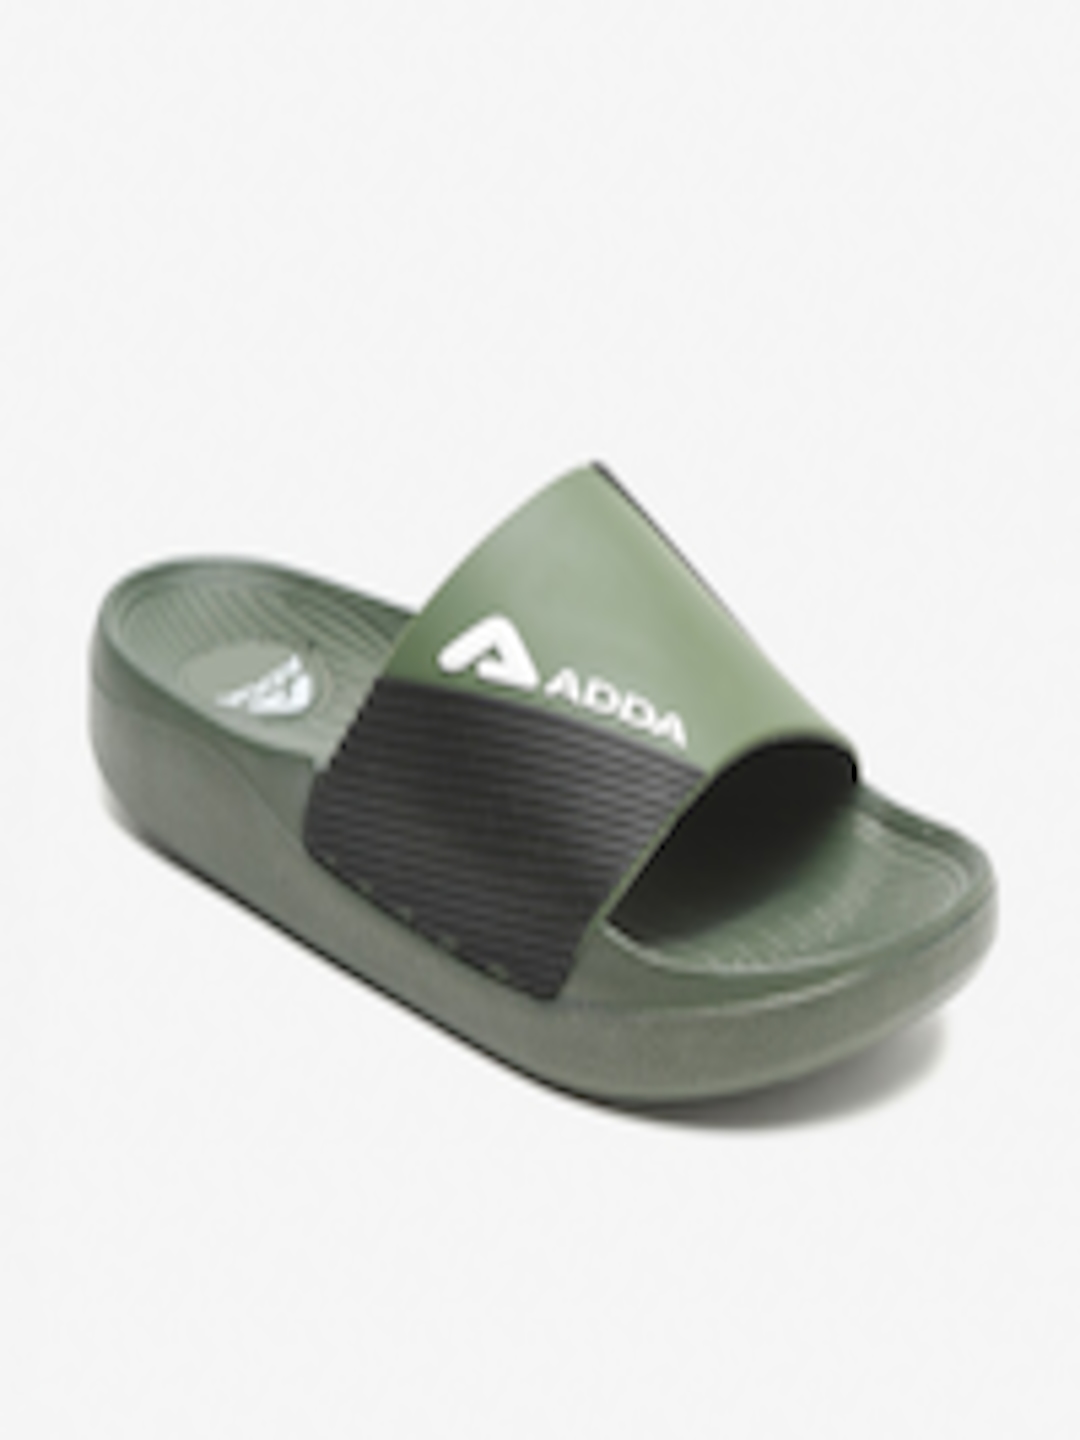 Buy Adda Men Olive Green & Black Colourblocked Rubber Sliders - Flip